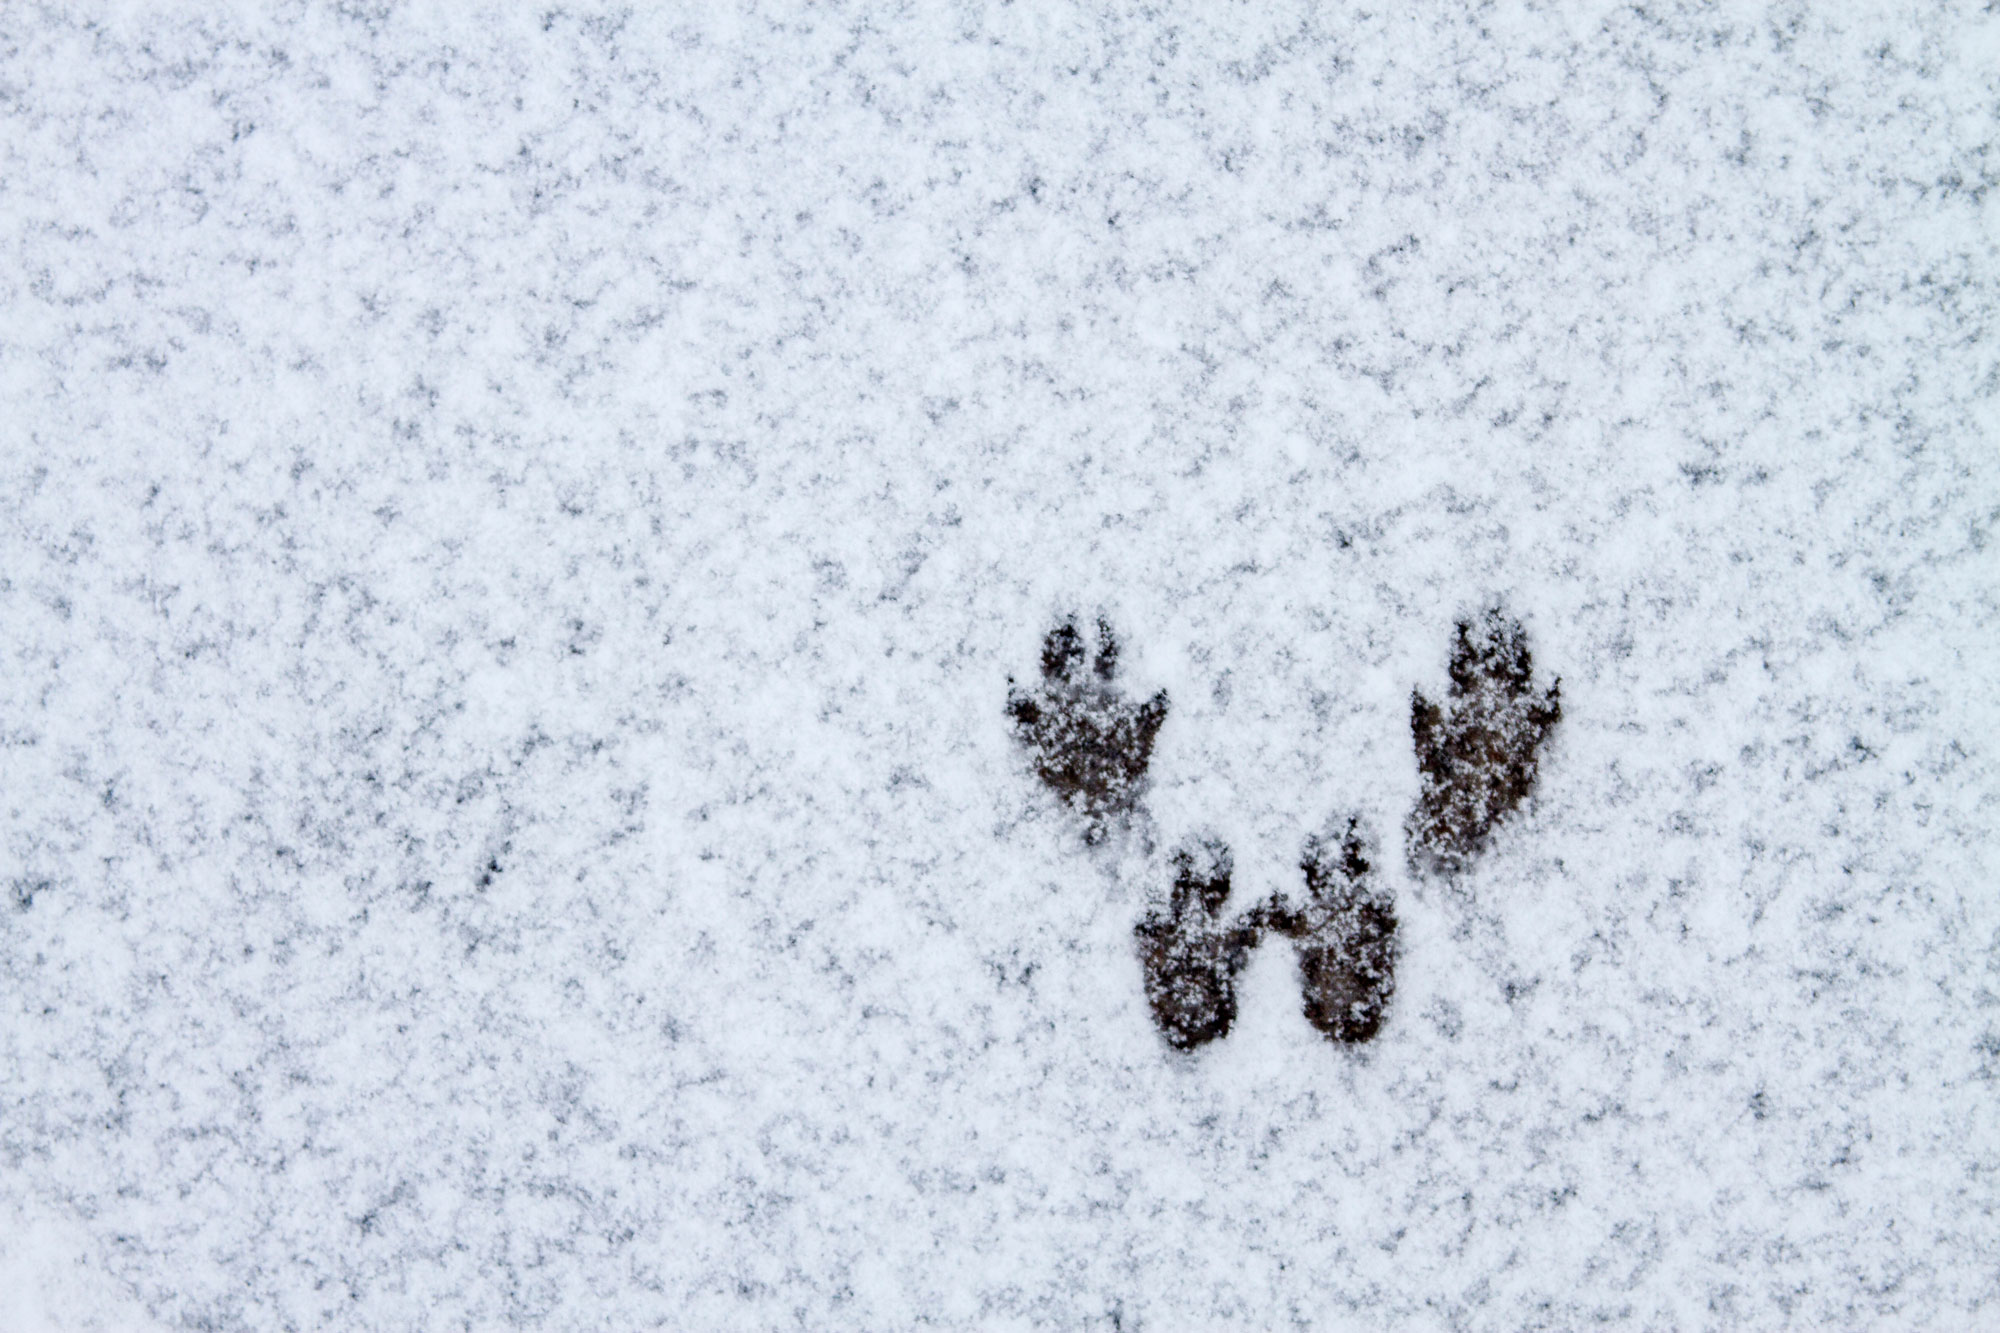 Squirrel tracks in snow.